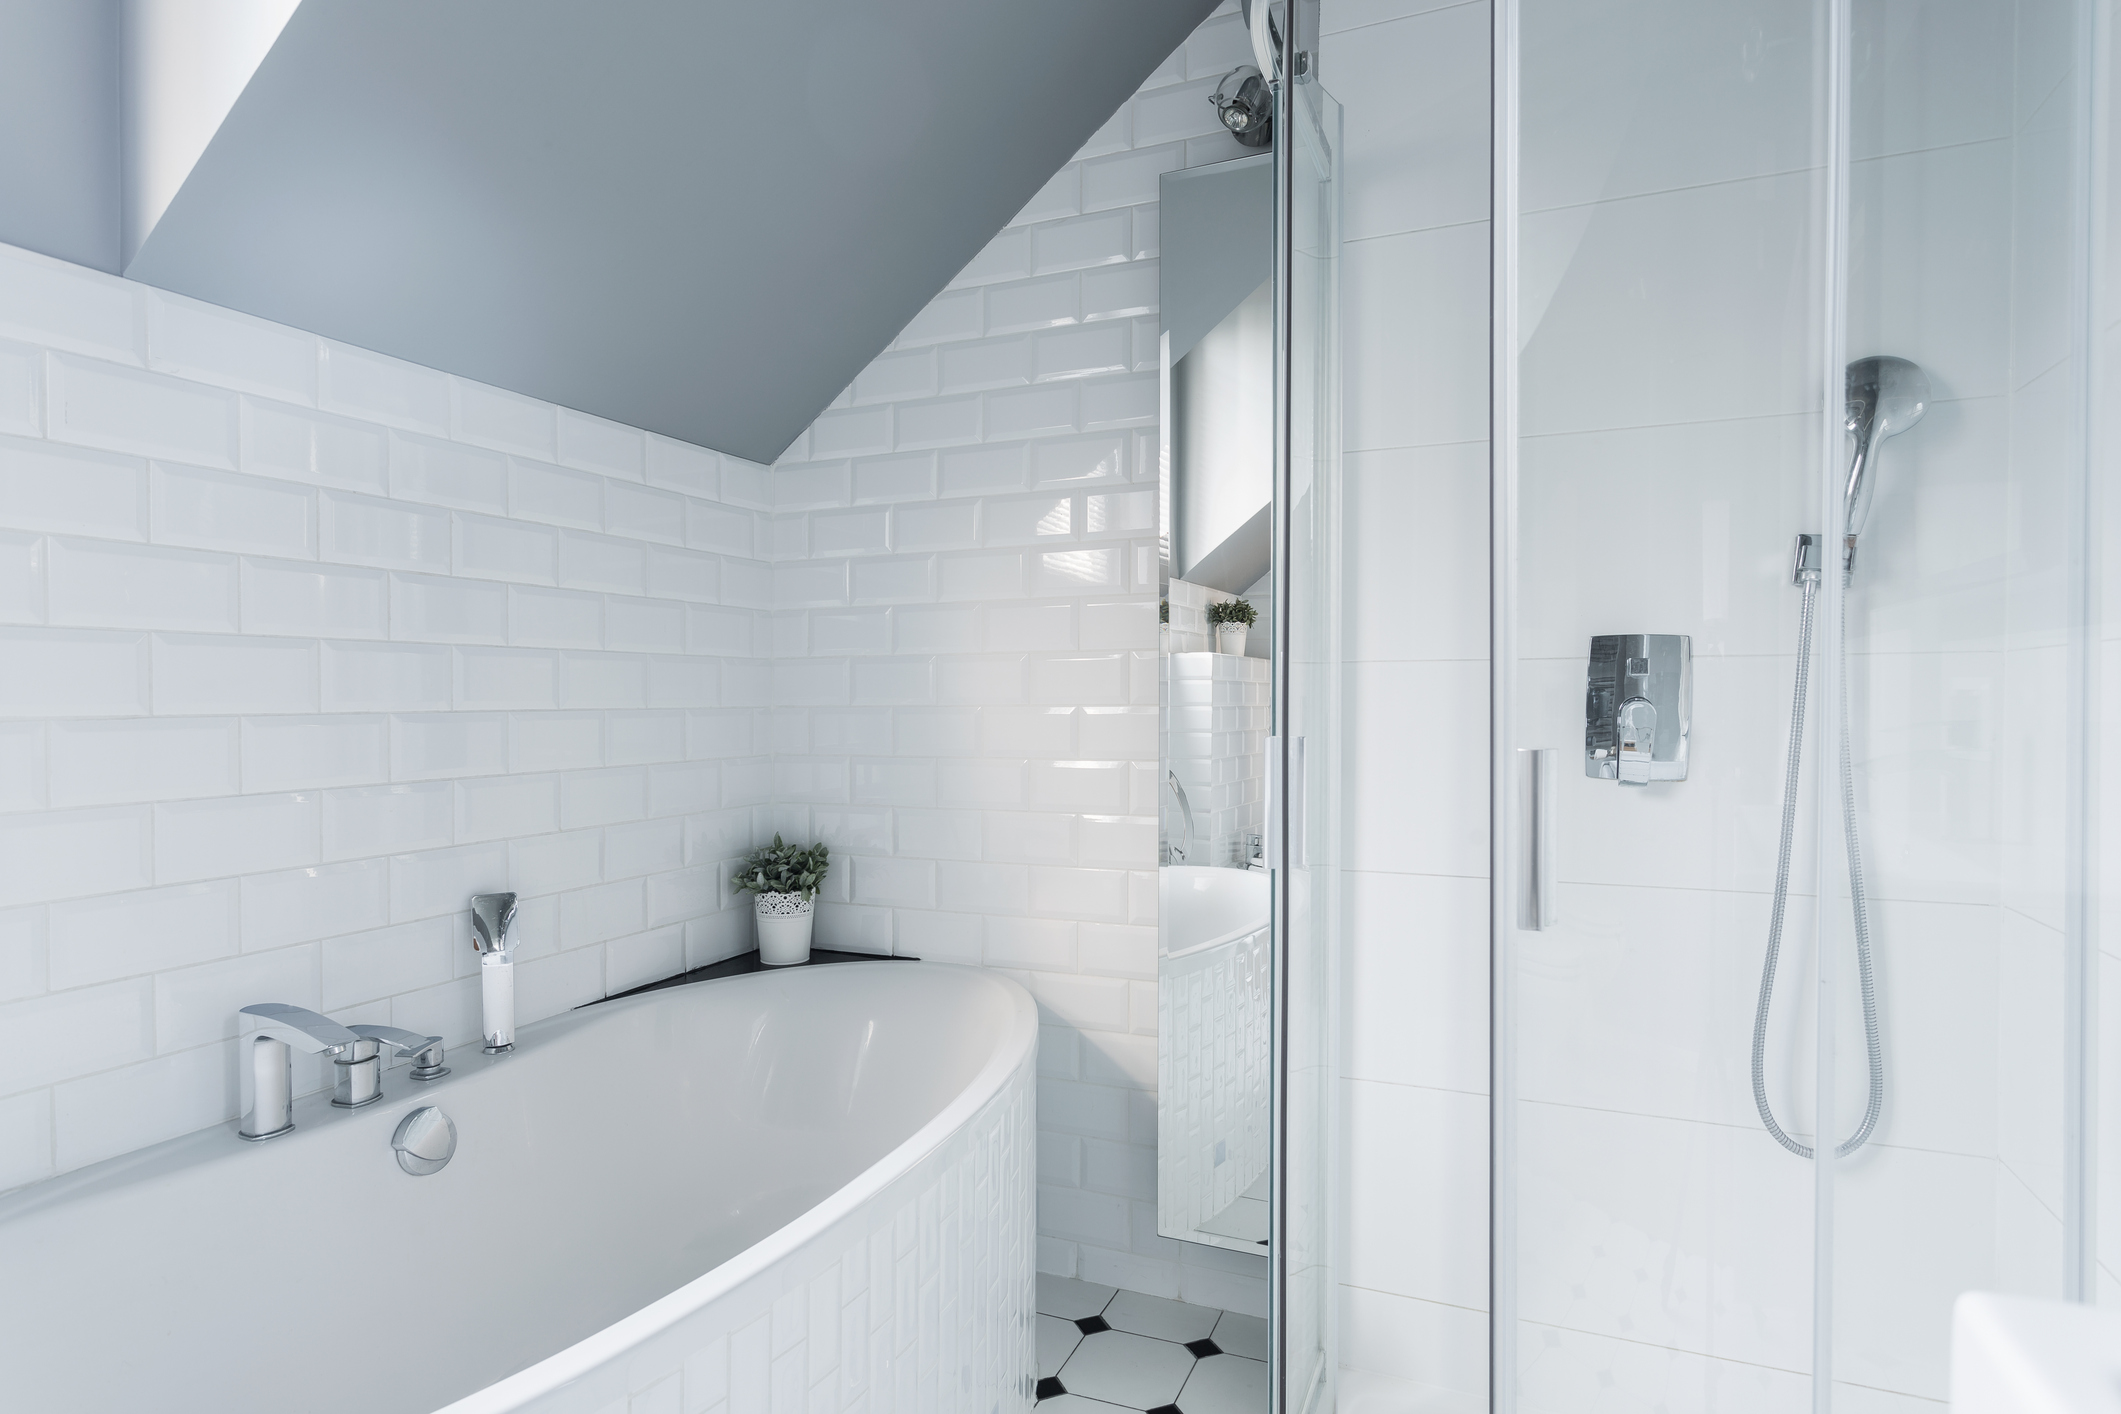 Keep bathroom tile grout white for longer. Image: Istock